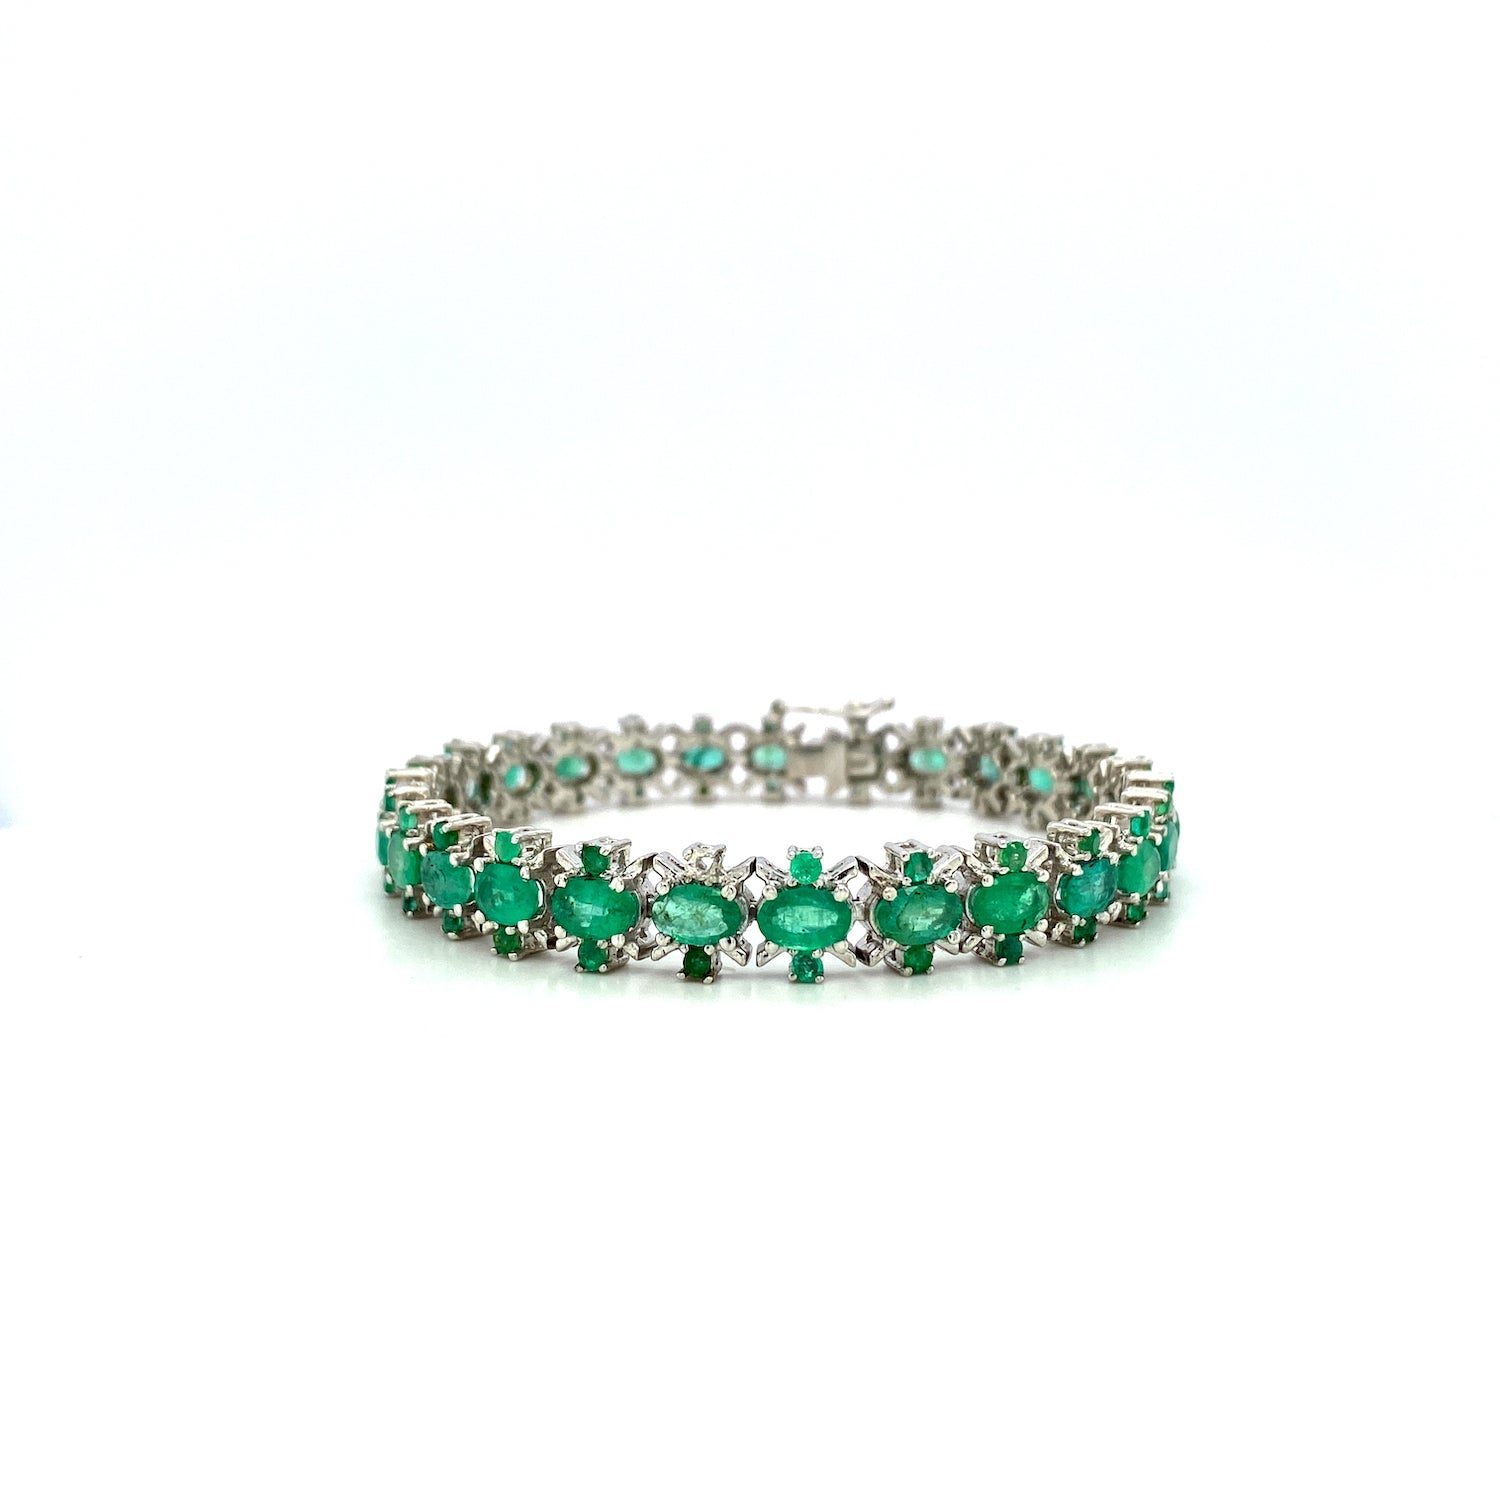 Buy Emerald Bracelet in 925 Sterling Silver - Rajasthan Living